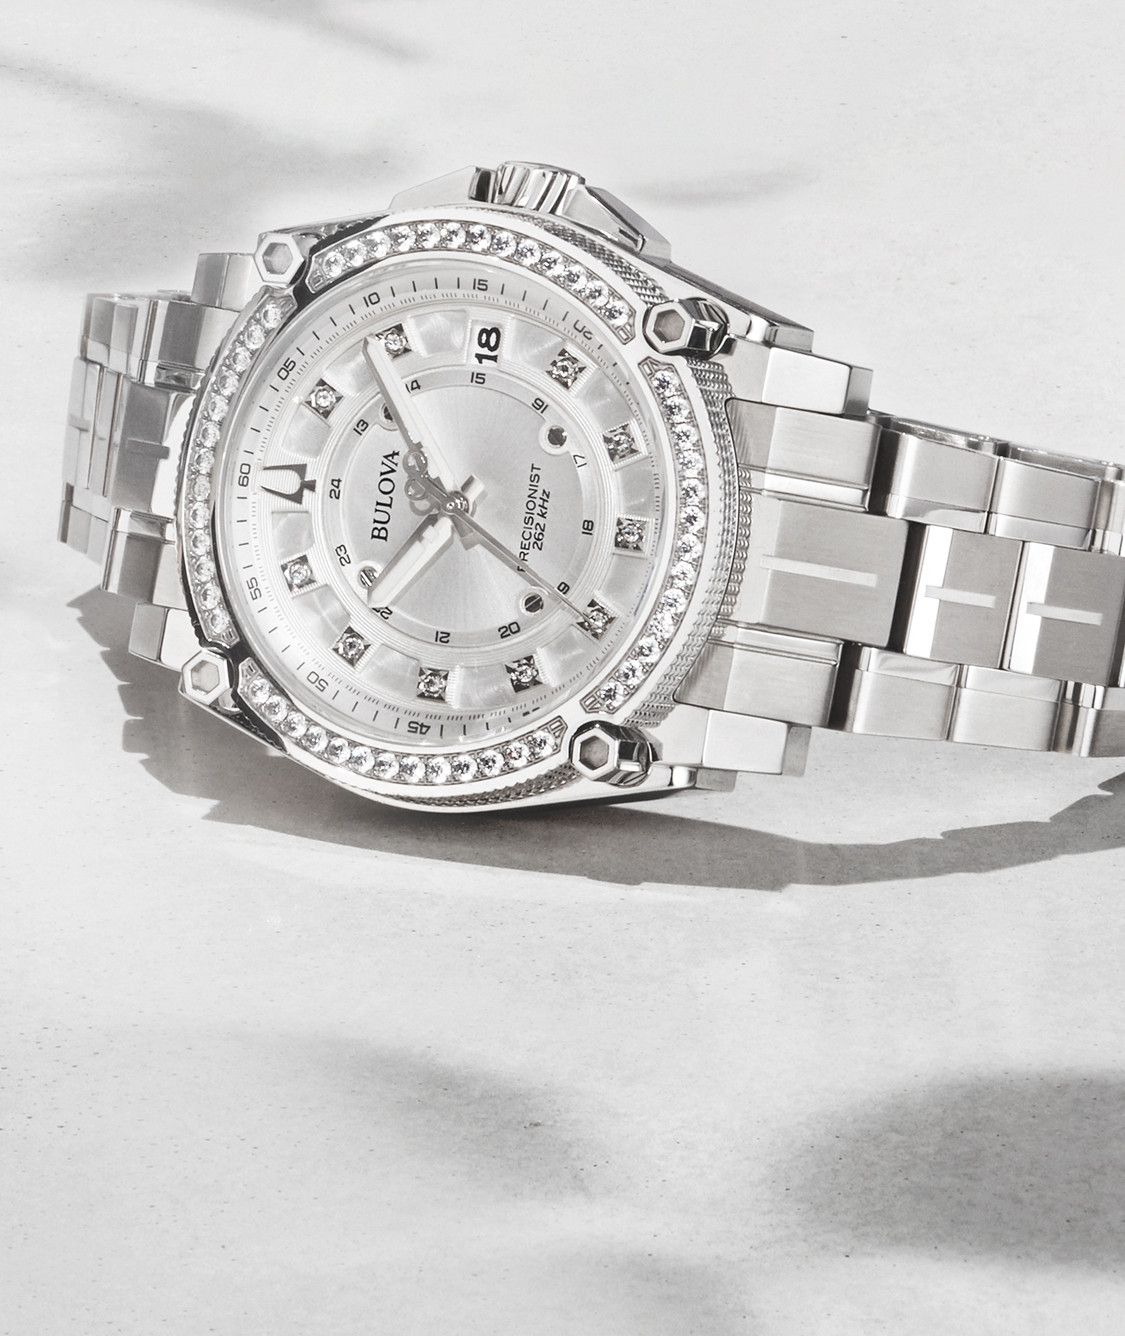 luxury diamond watches for women